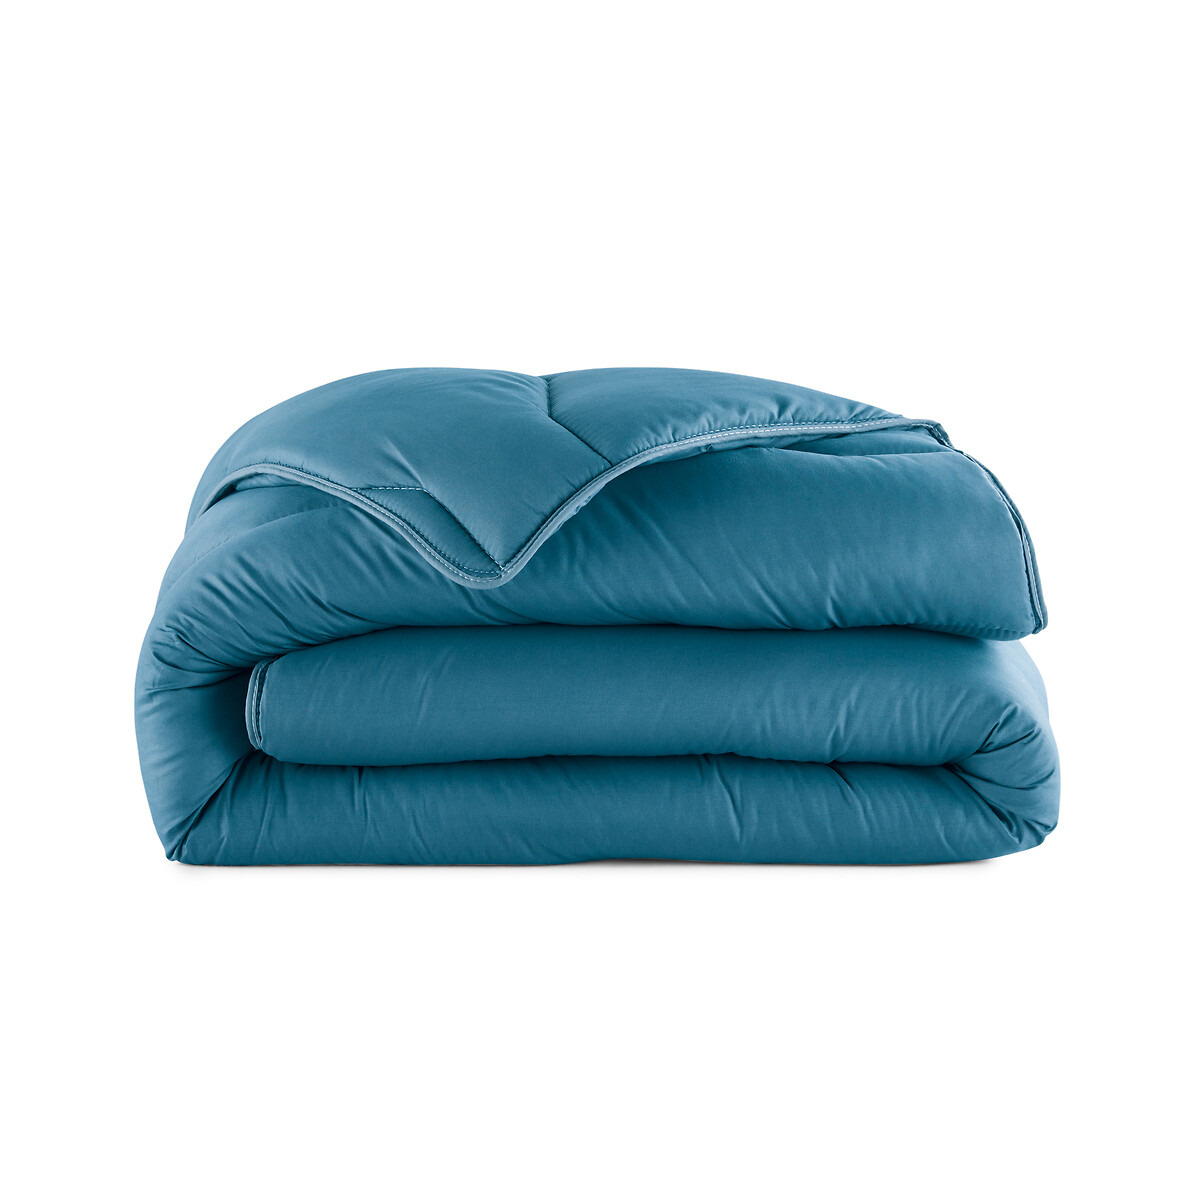 Одеяло LA REDOUTE INTERIEURS 100 полиэстер качество стандарт 300 гм 240 x 220 см синий, размер 240 x 220 см - фото 2